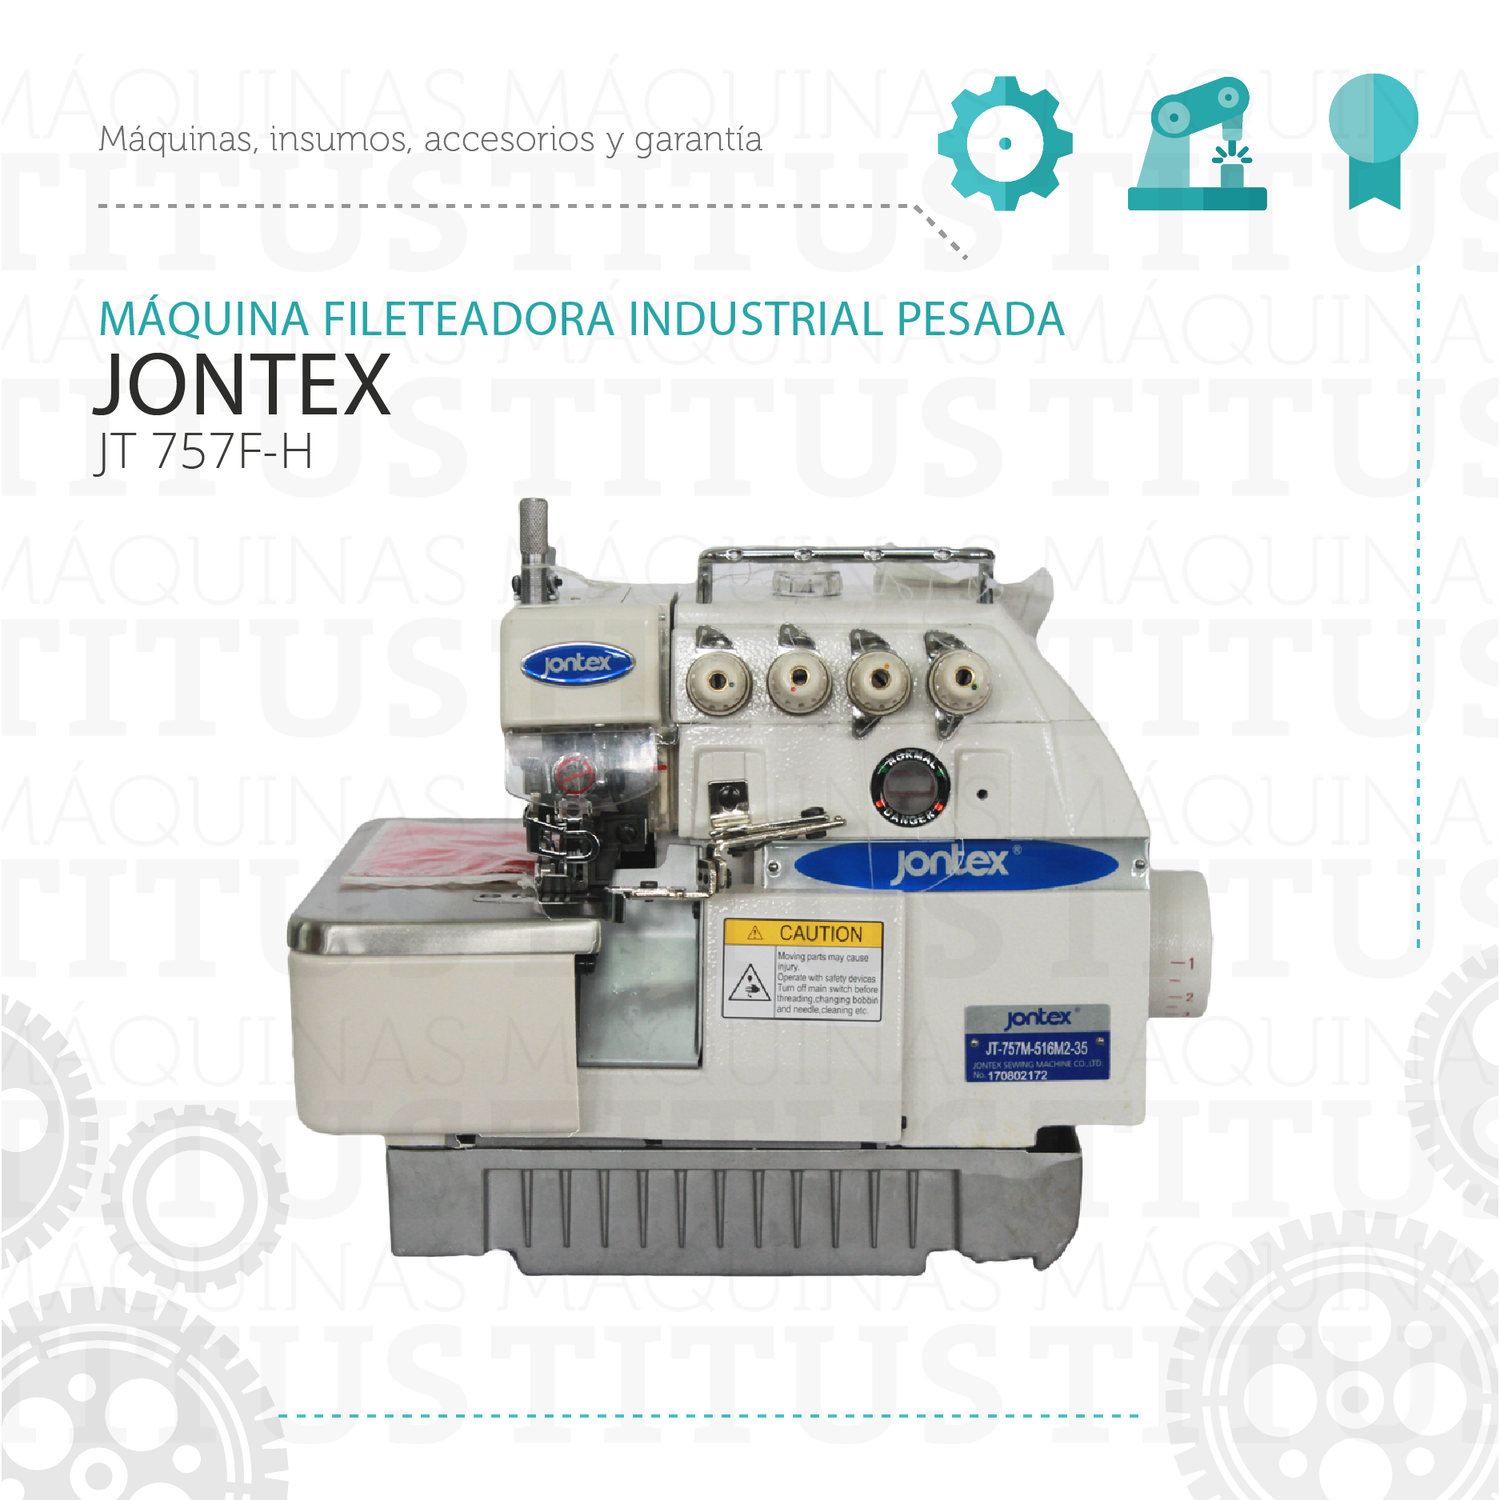 Fileteadora Industrial Jontex JT 757 F-H Pesada - Commercio